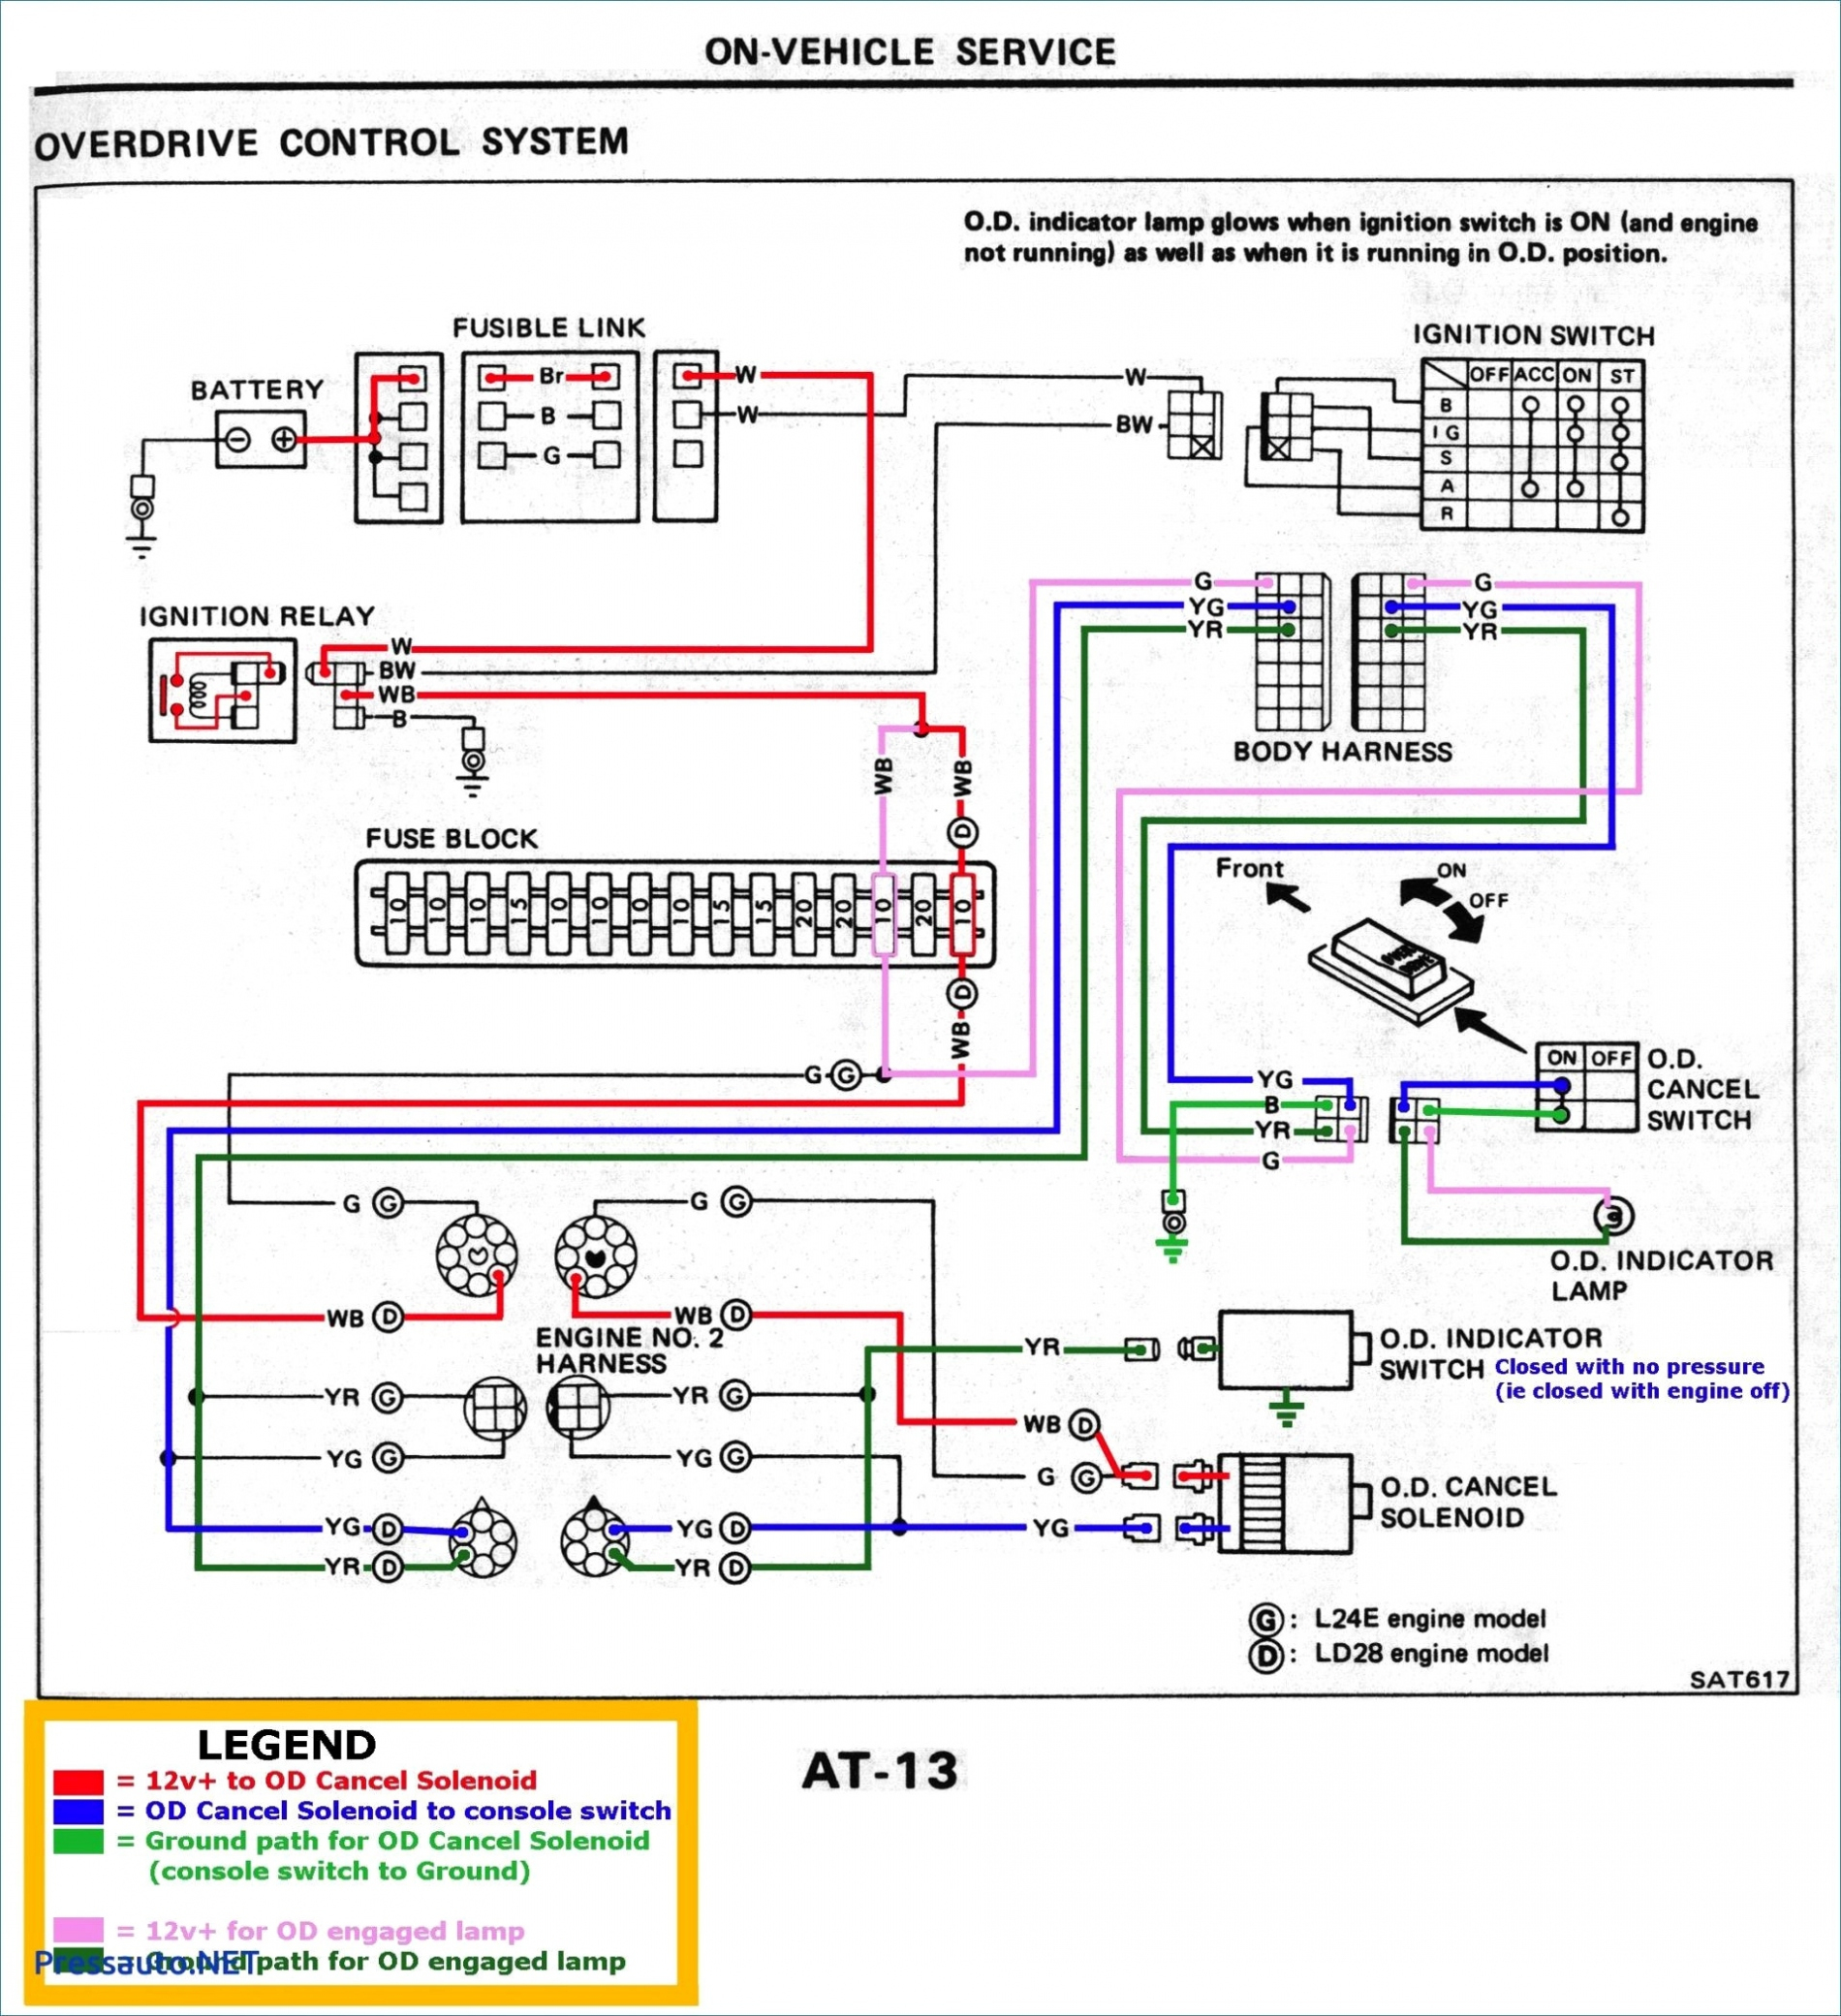 Diagram Flat Blad 7 Wire Trailer Wiring Diagram Full Version Hd Quality Wiring Diagram Claudiagramegna Host Serveur Fr